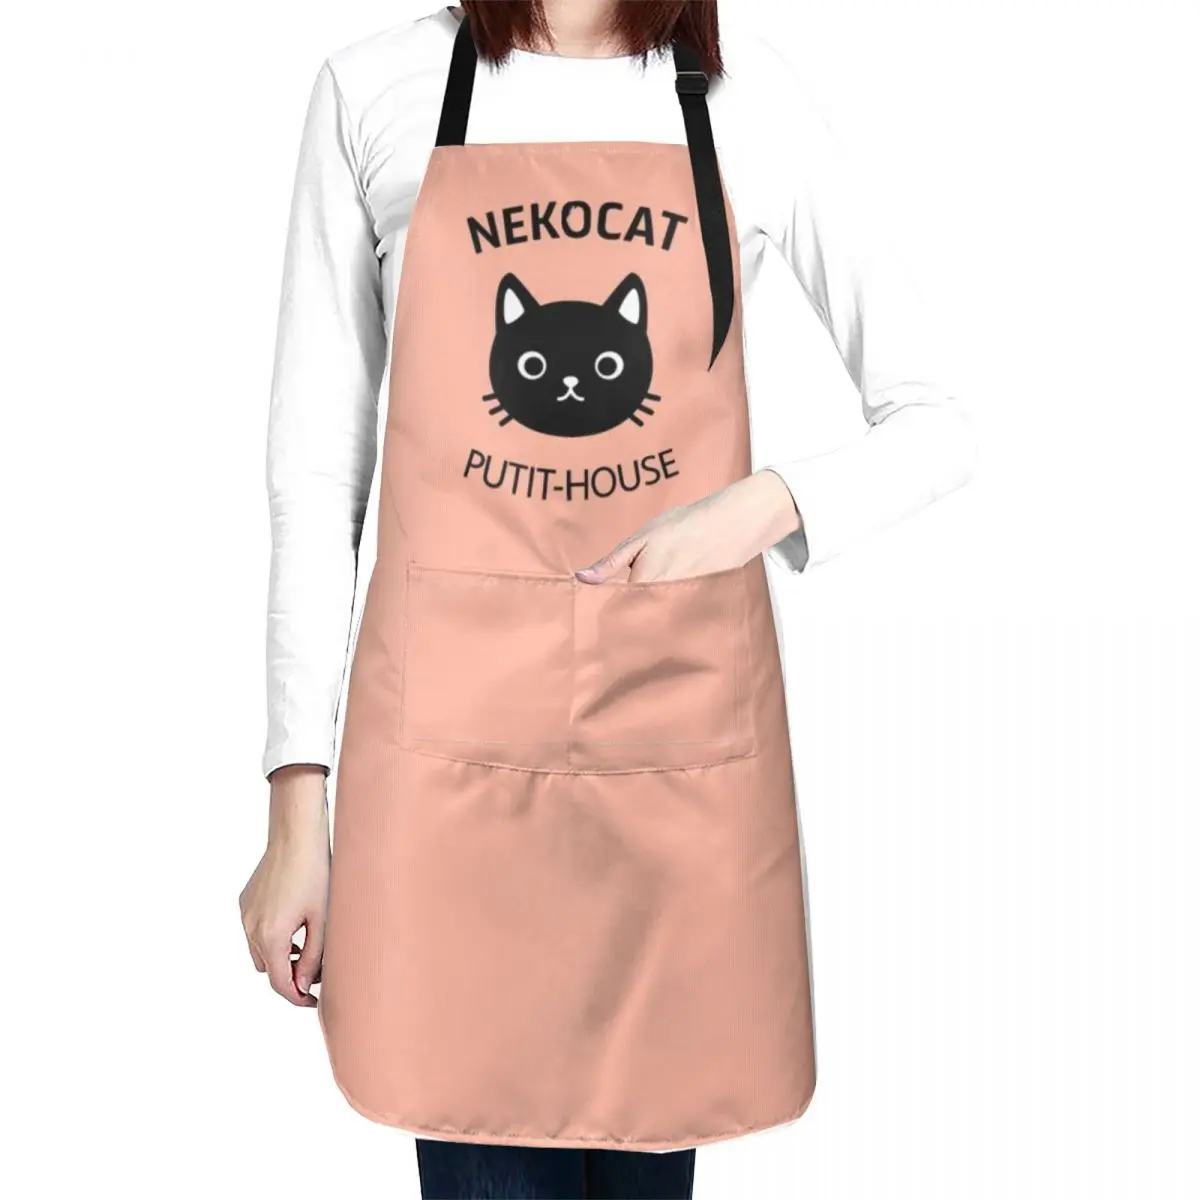 

NekoCat Putit-House Apron Kitchen Aprons Woman Kitchen Chef chef costume An Apron